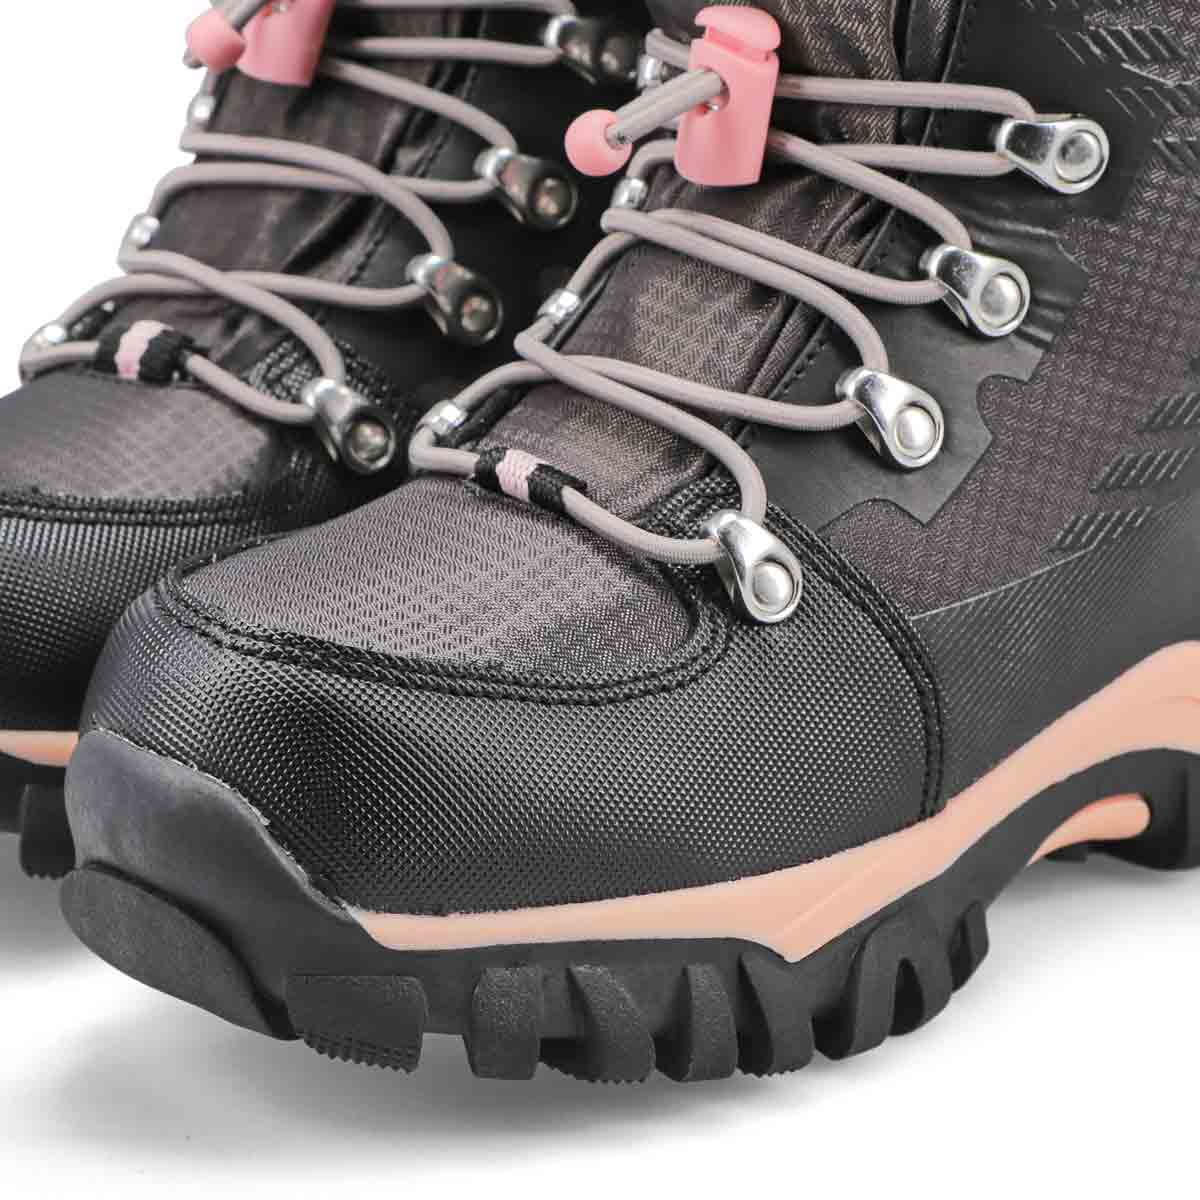 Girls' TOASTY Waterproof Winter Boot - Charcoal